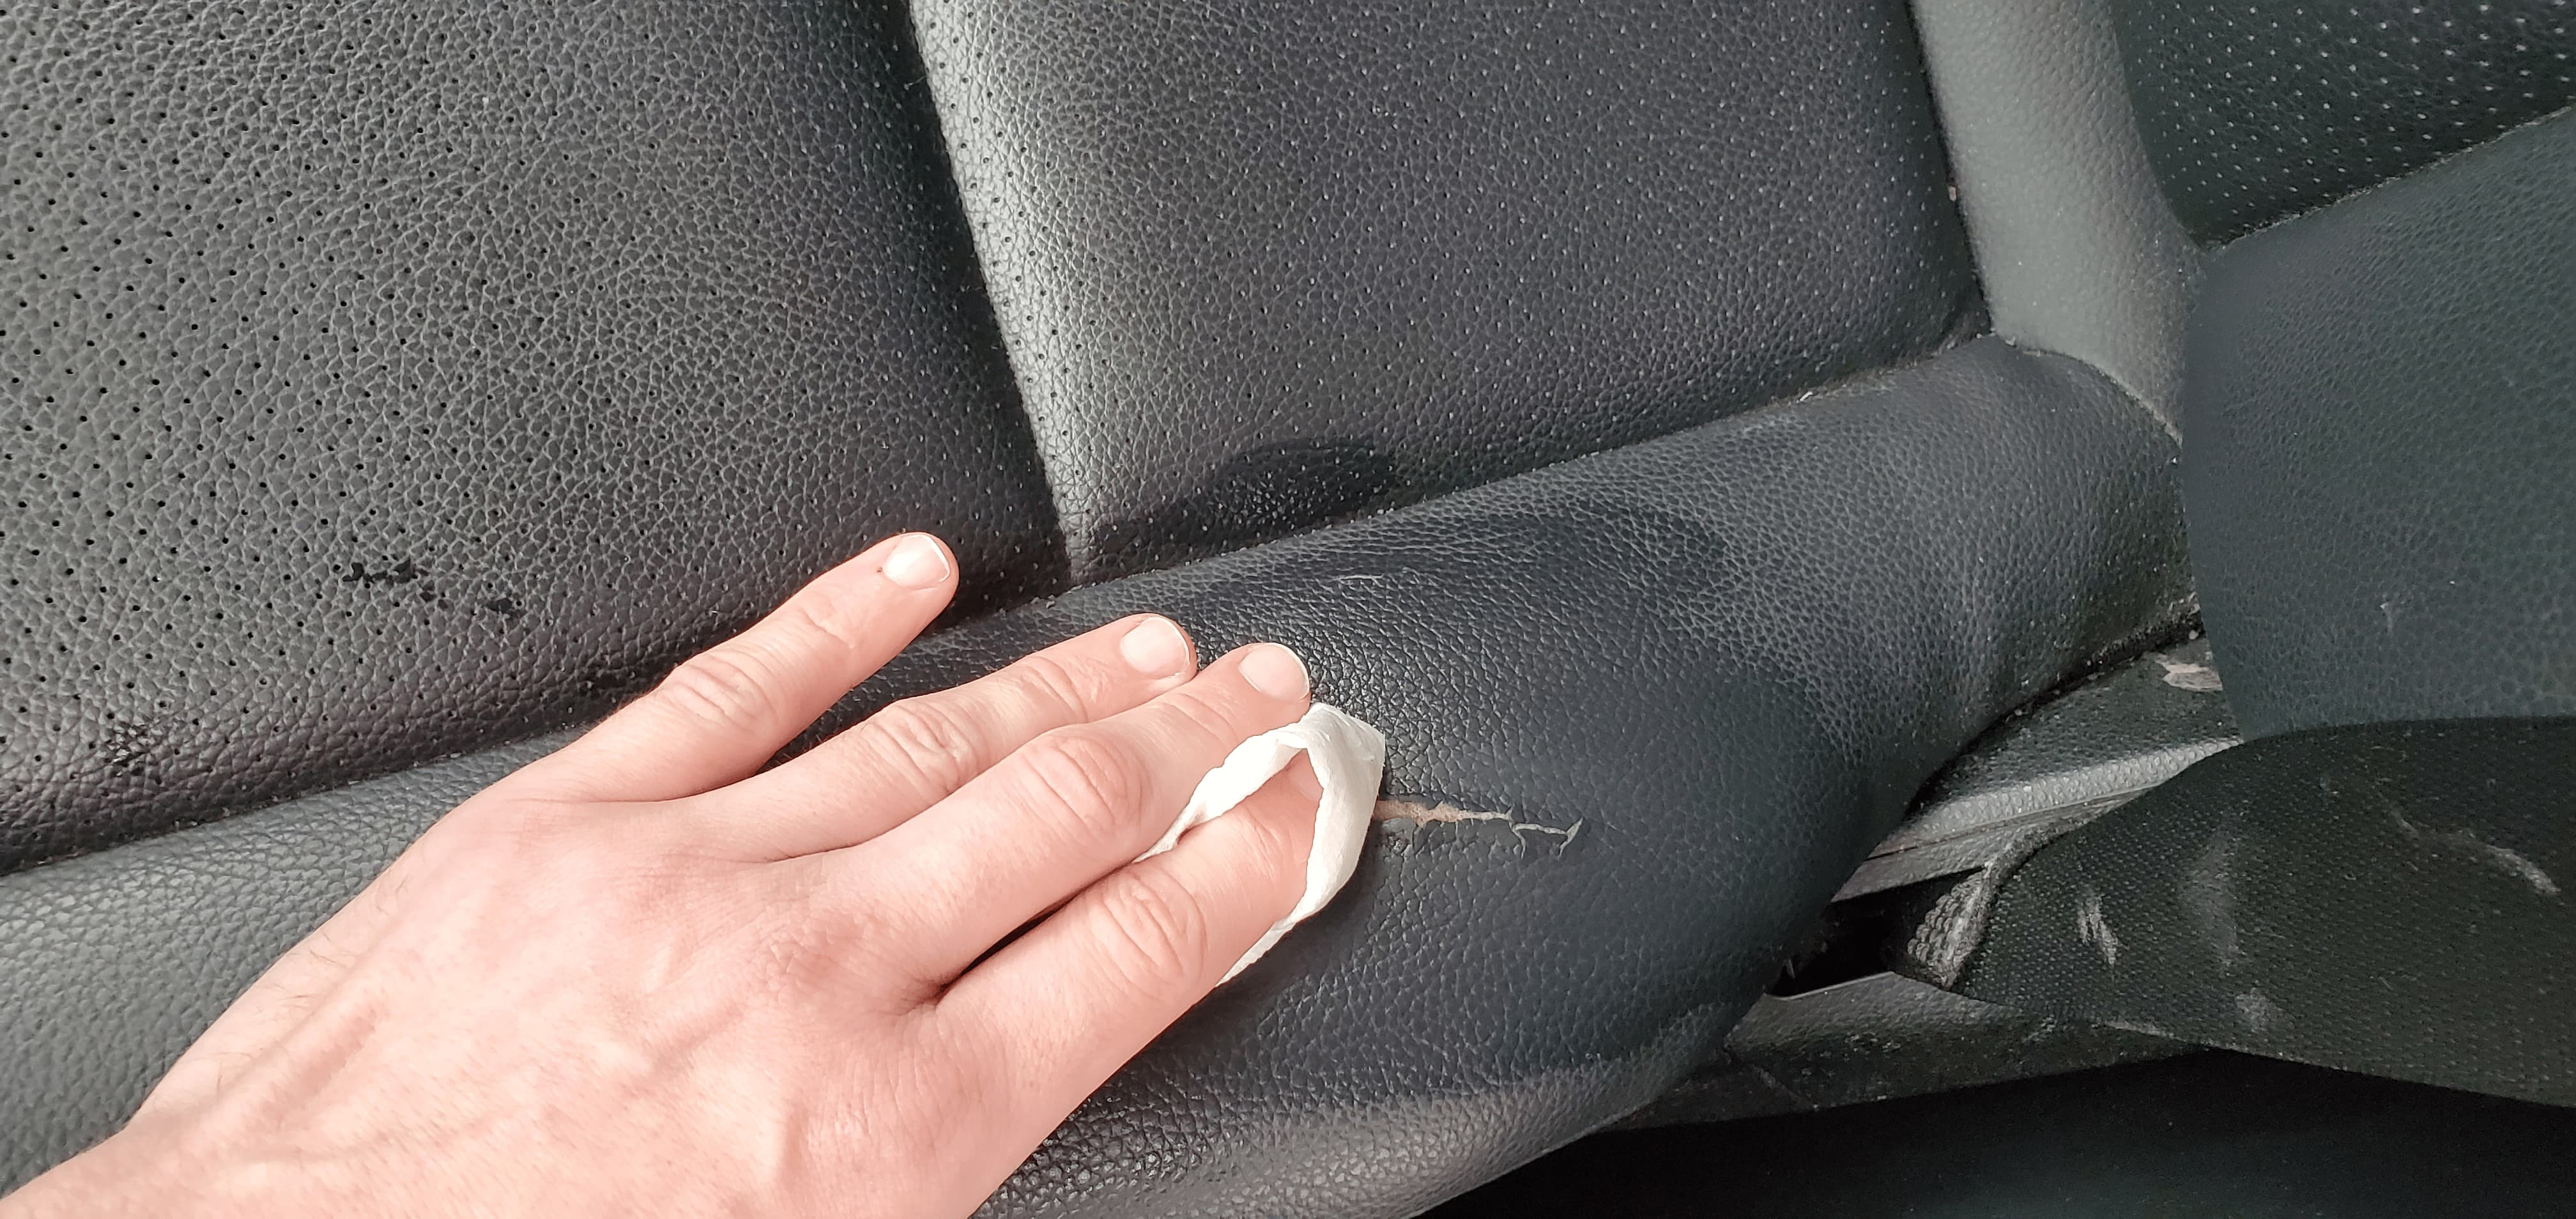 maintenance - How can I repair cracks in leather seat? - Motor